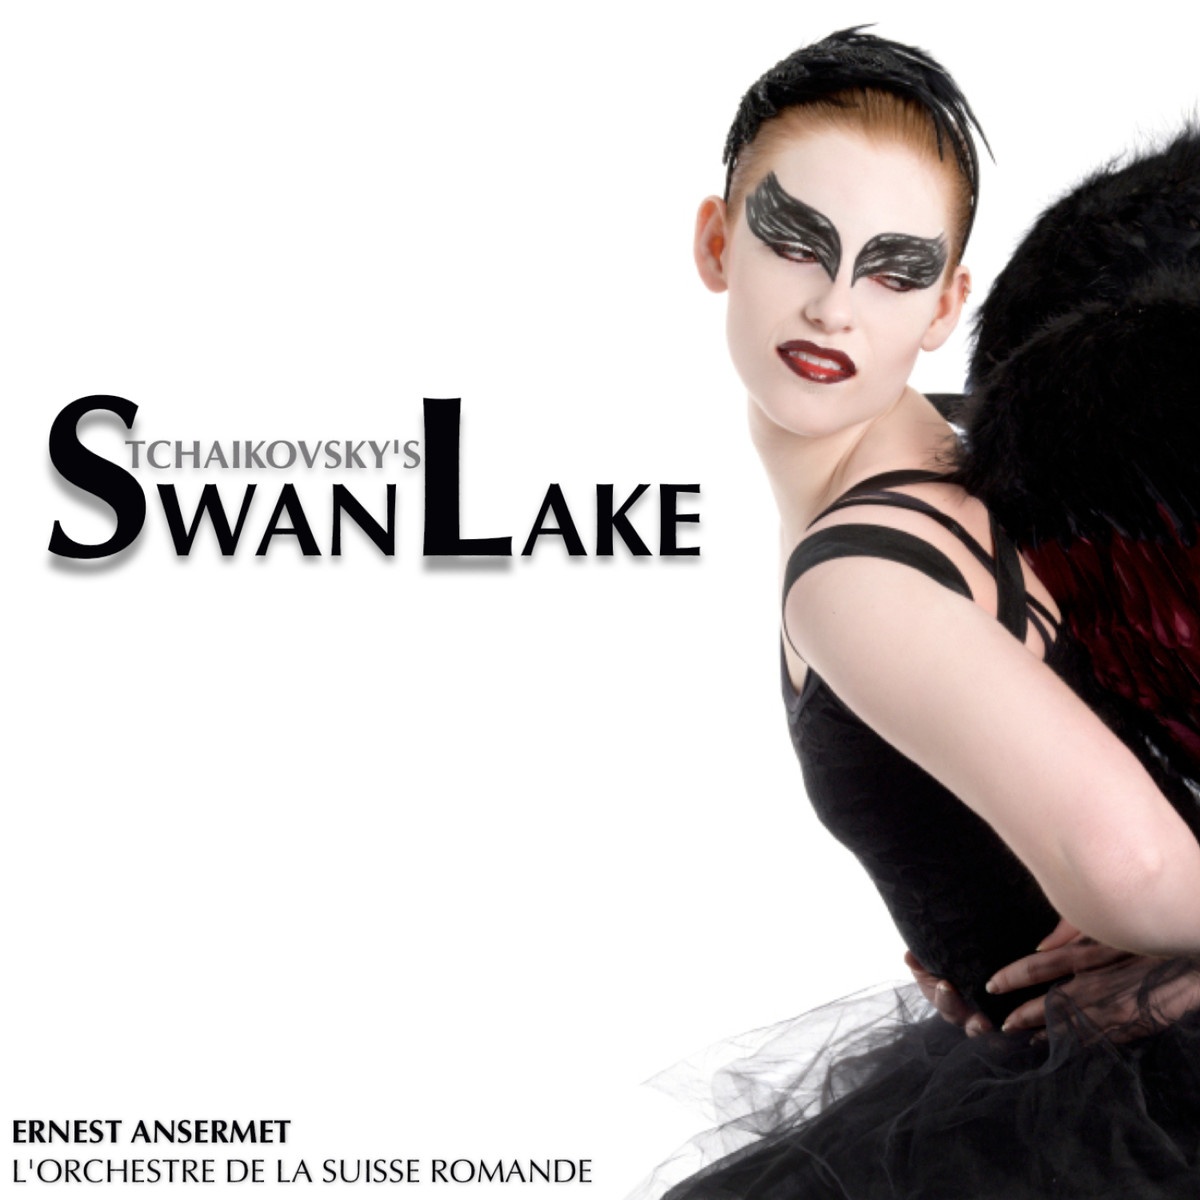 Swan Lake, Op. 20  Act 2  No. 13b Danse des cygnes: Odette solo Premie re danse de la reine des cygnes Moderato assai